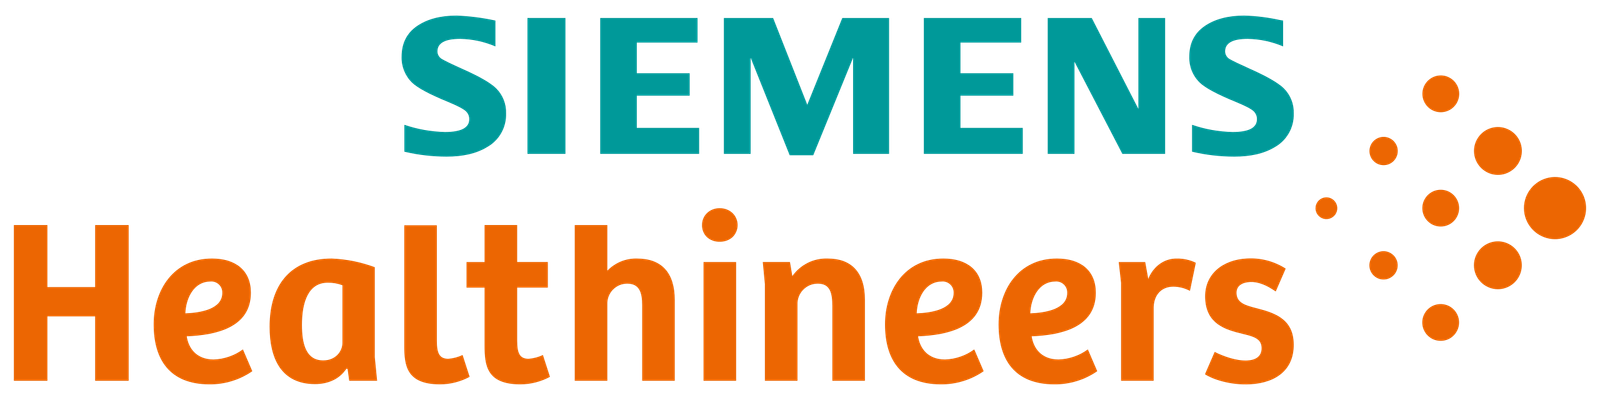 Madagascar Medical Technology - Siemens Healthineers - logo